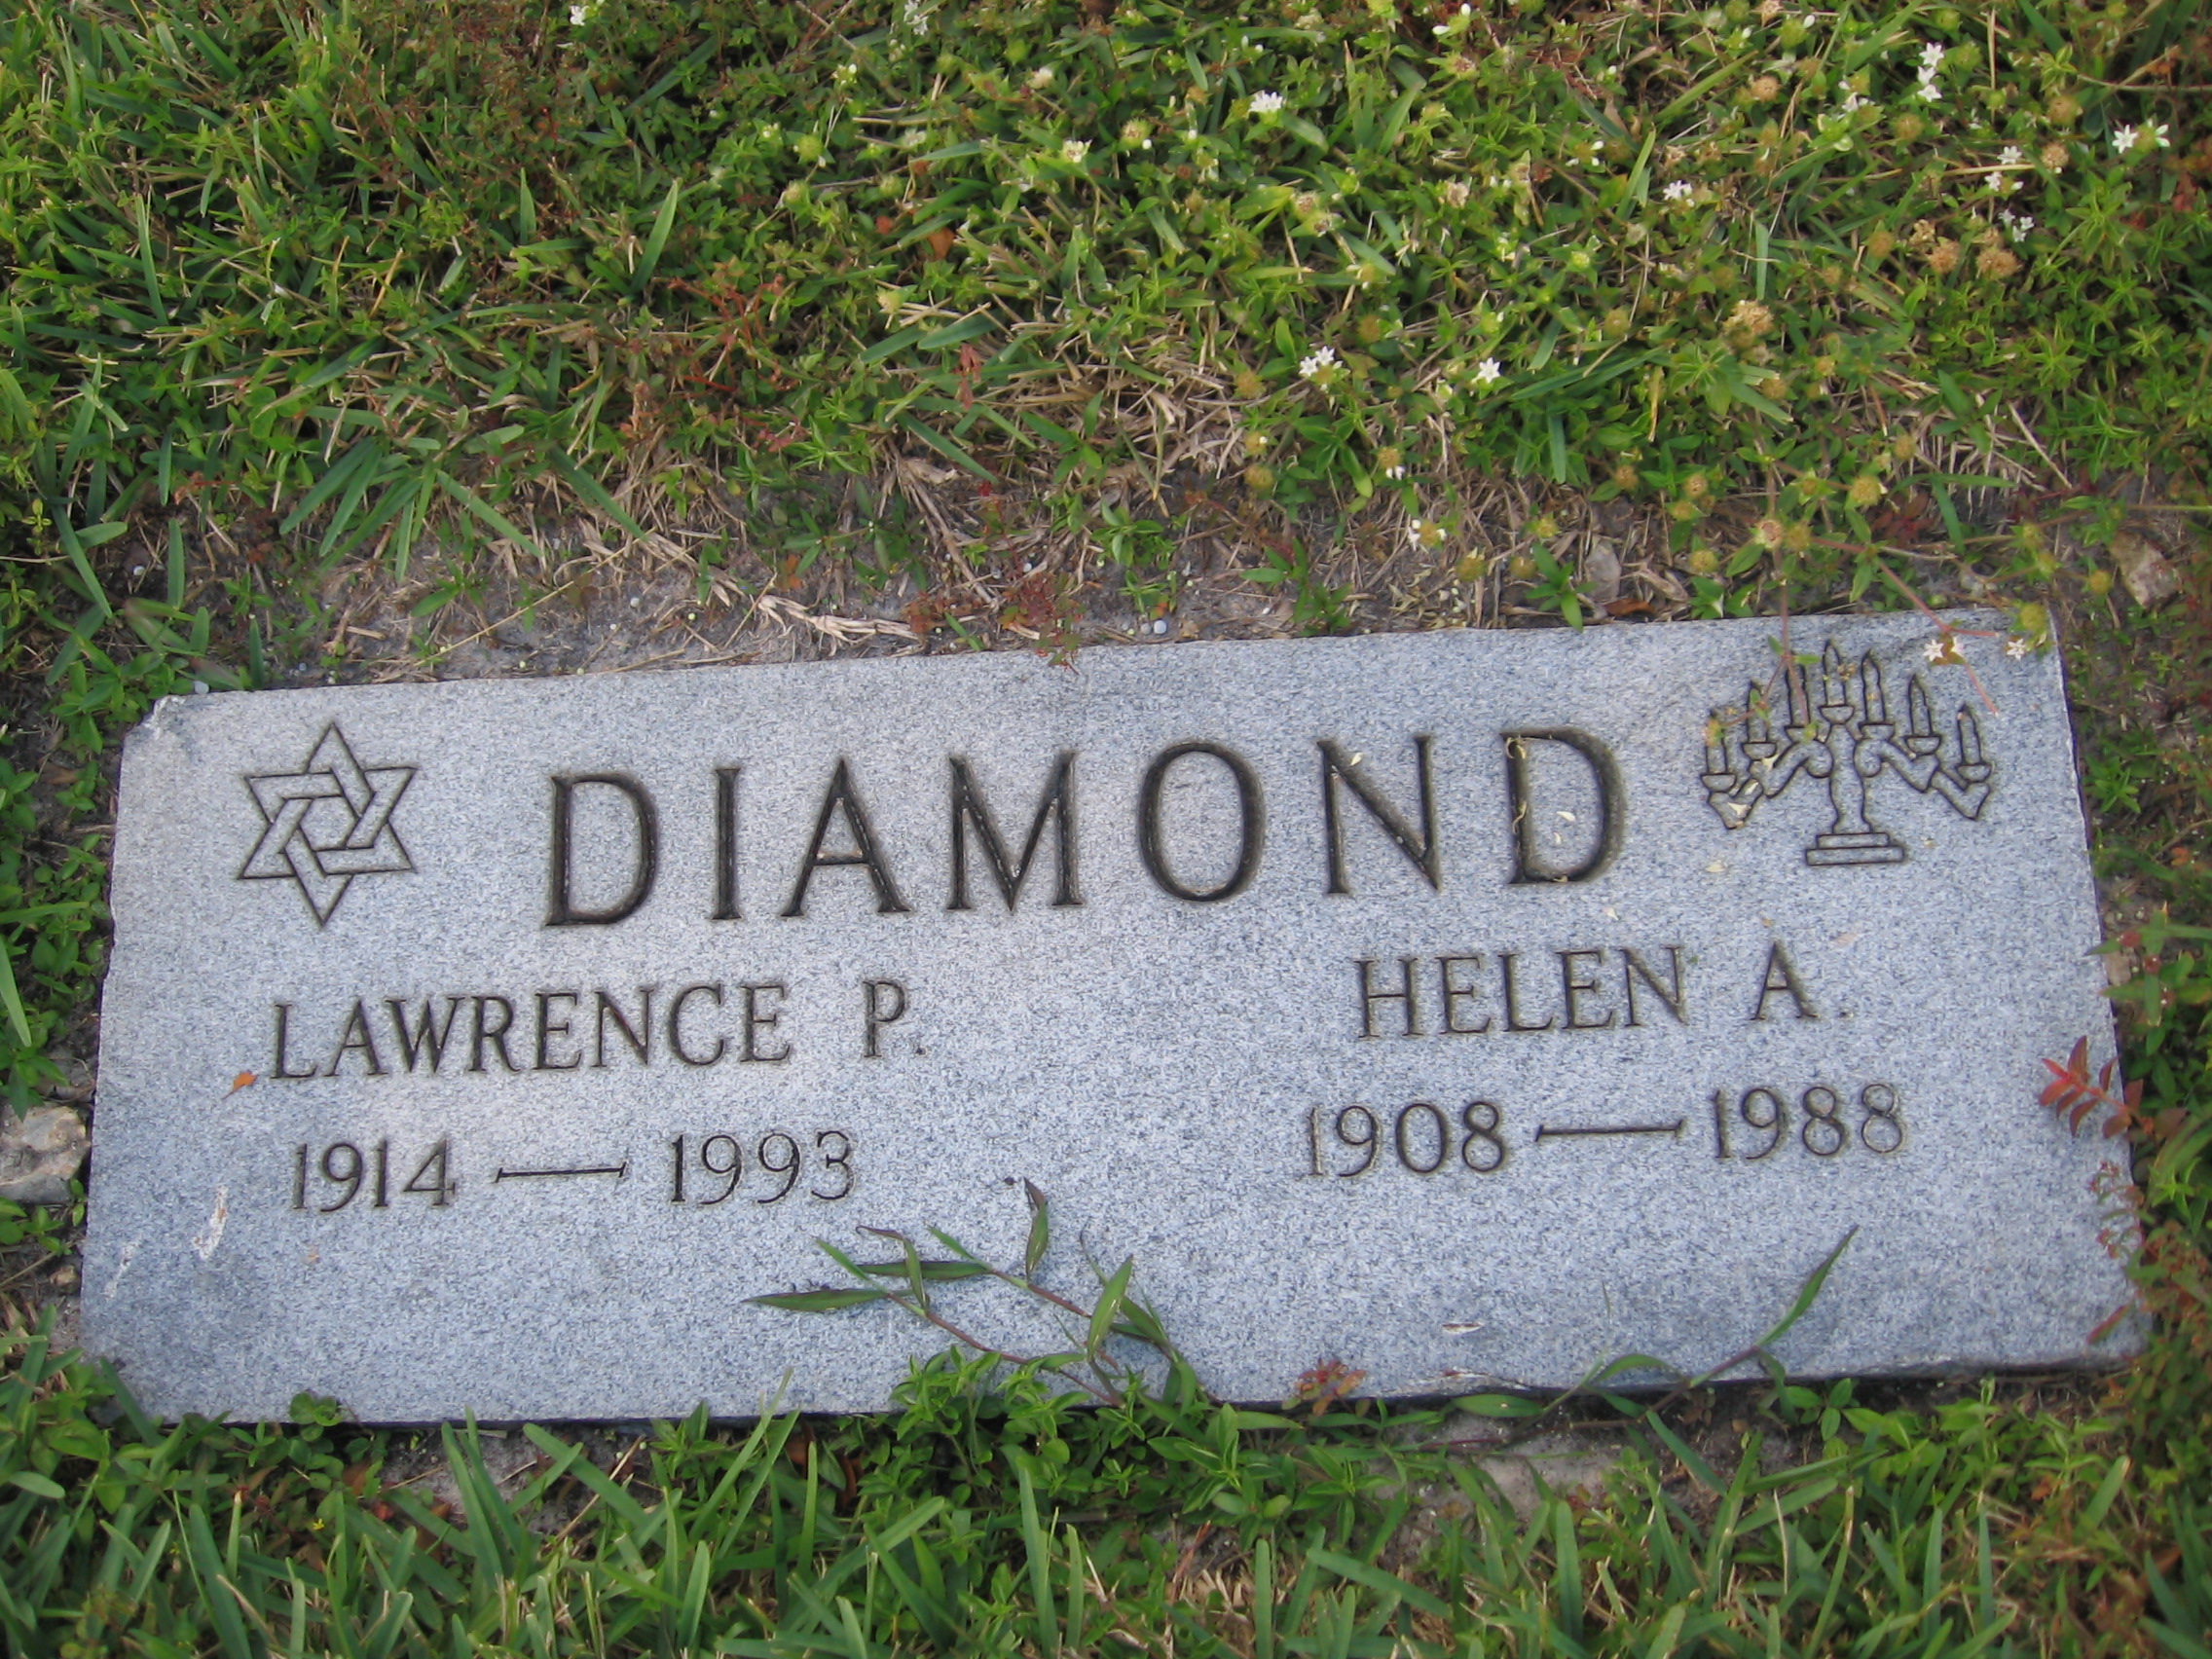 Lawrence P Diamond